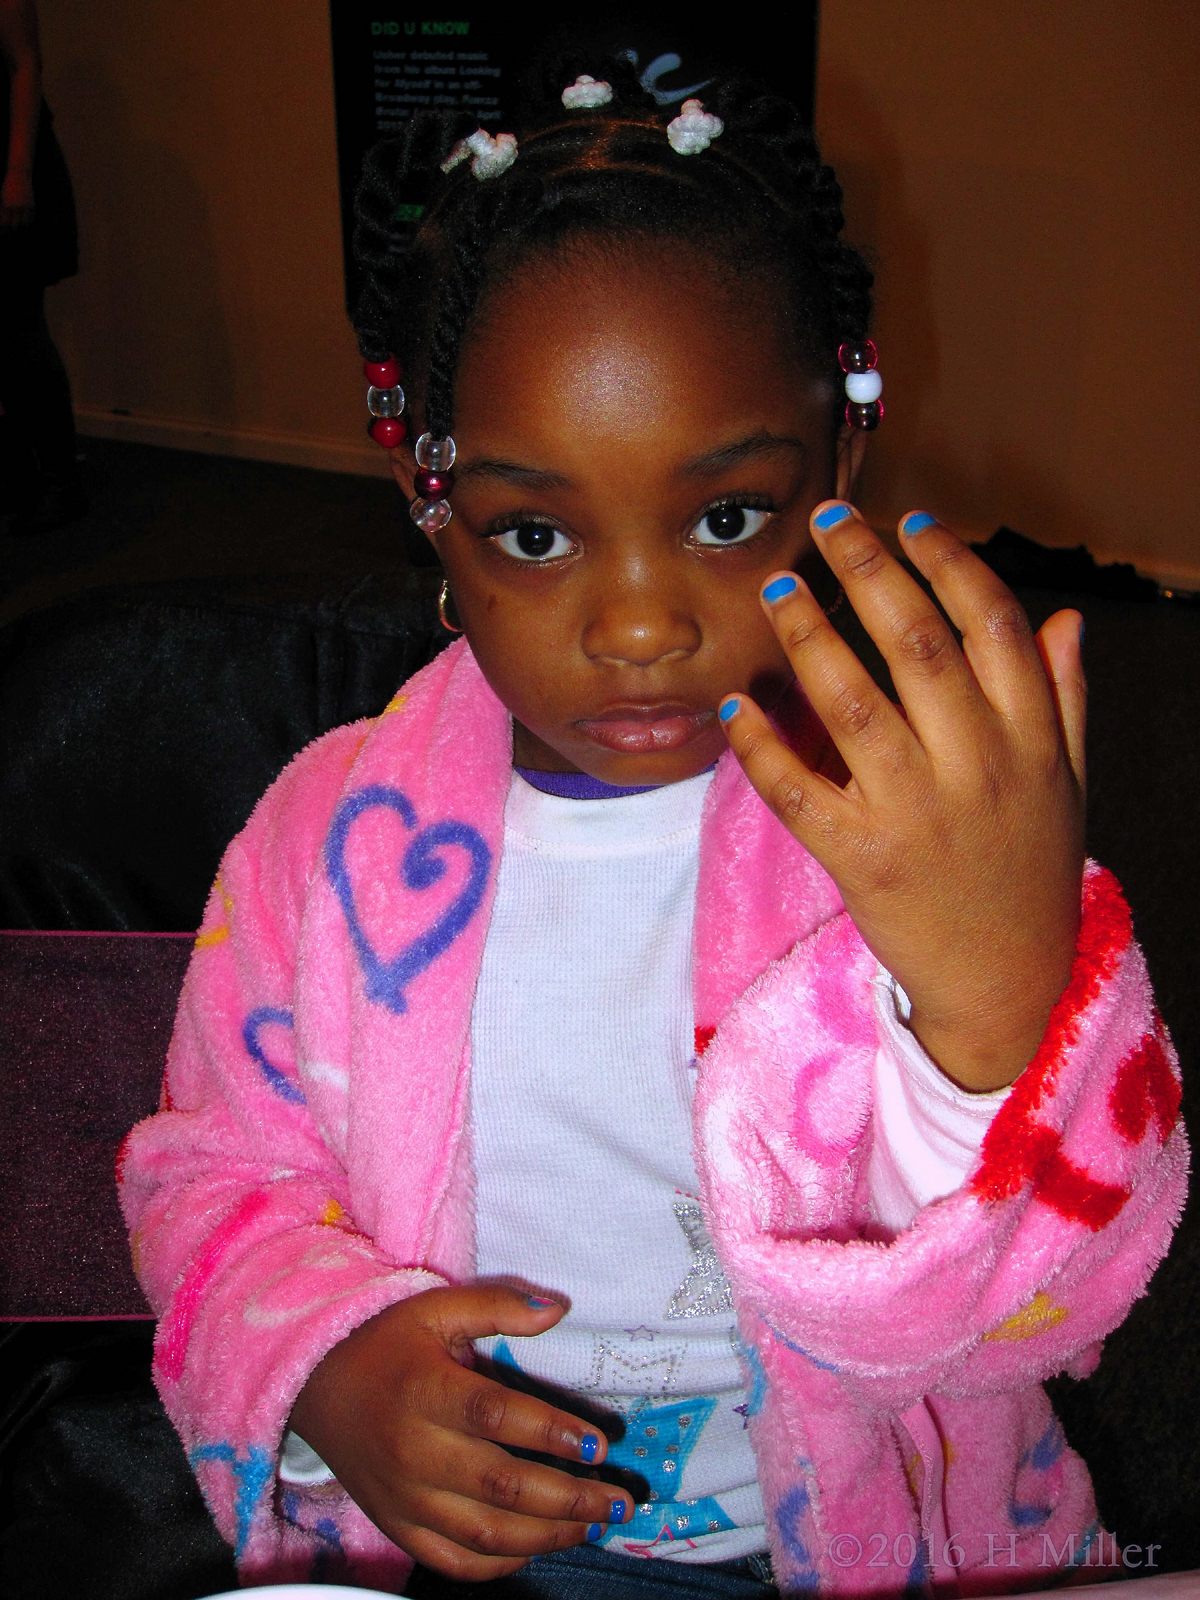 She Loves Her Blue Mini Manicure! 